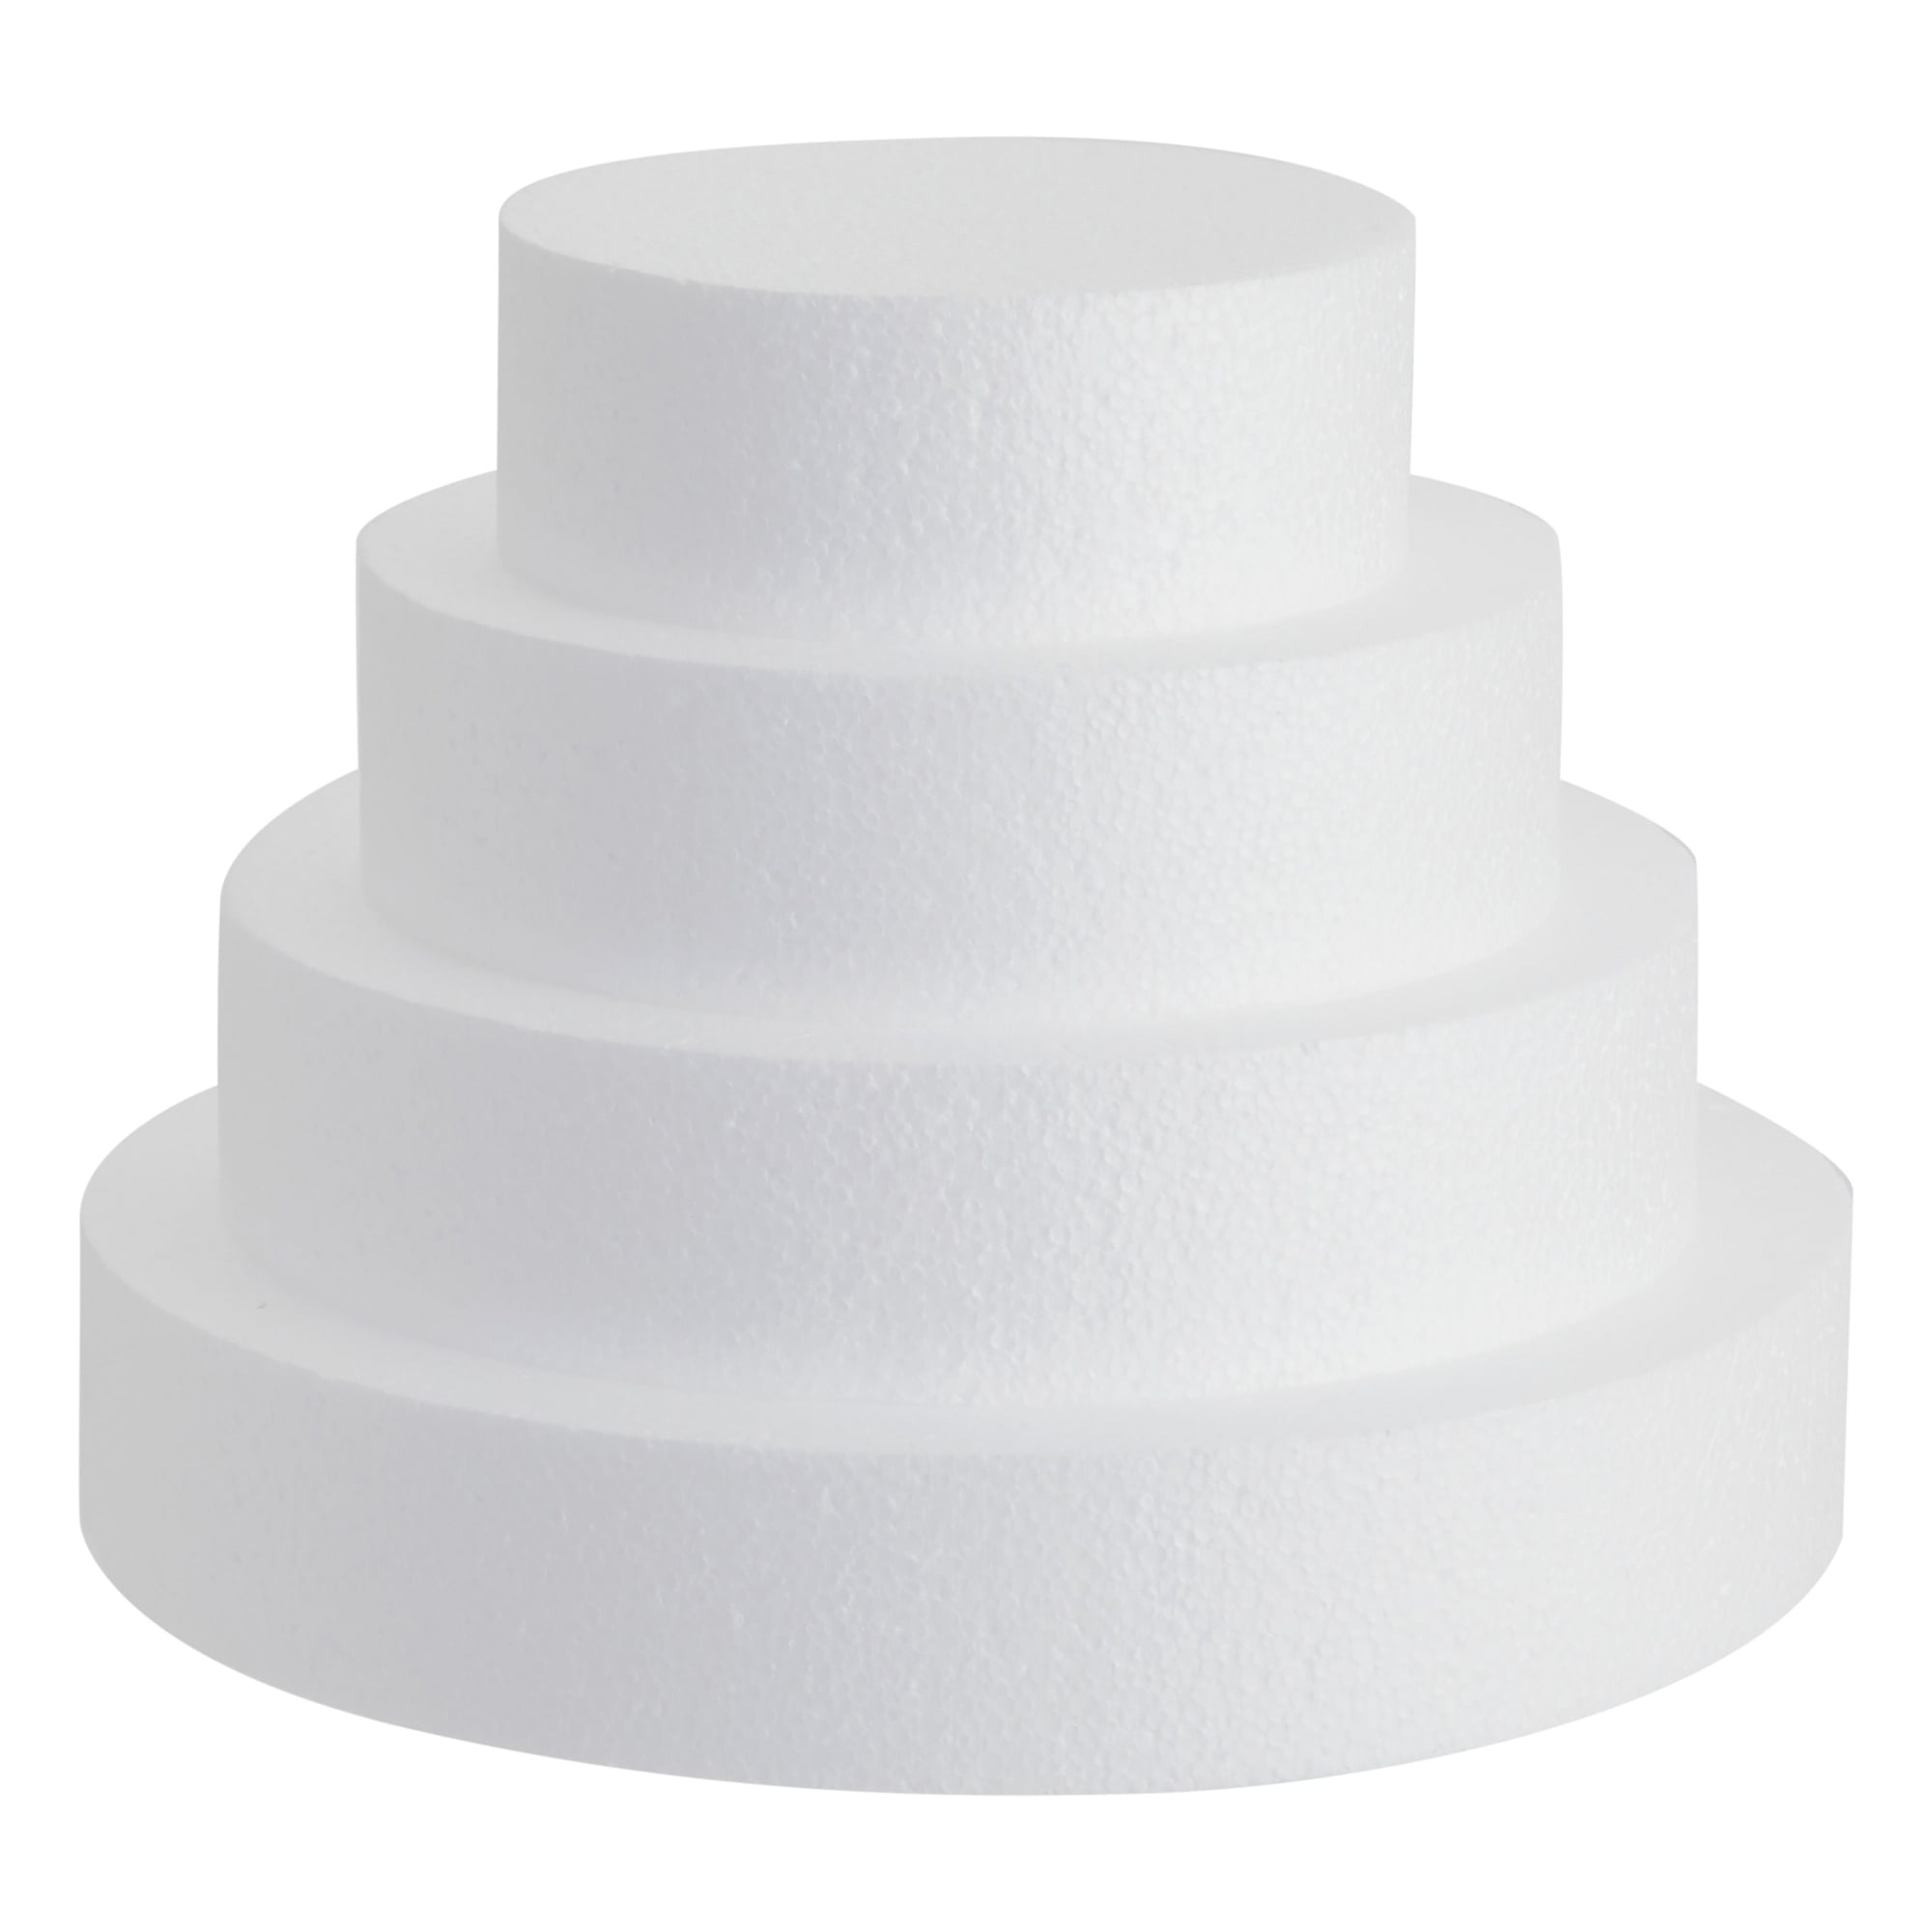 4 Piece White Round Cake Dummy Tier Set, Foam Fake Cake in 4 Sizes for  Decorating and Crafts, Baking Displays, Wedding Cake Design, Birthday  Cakes